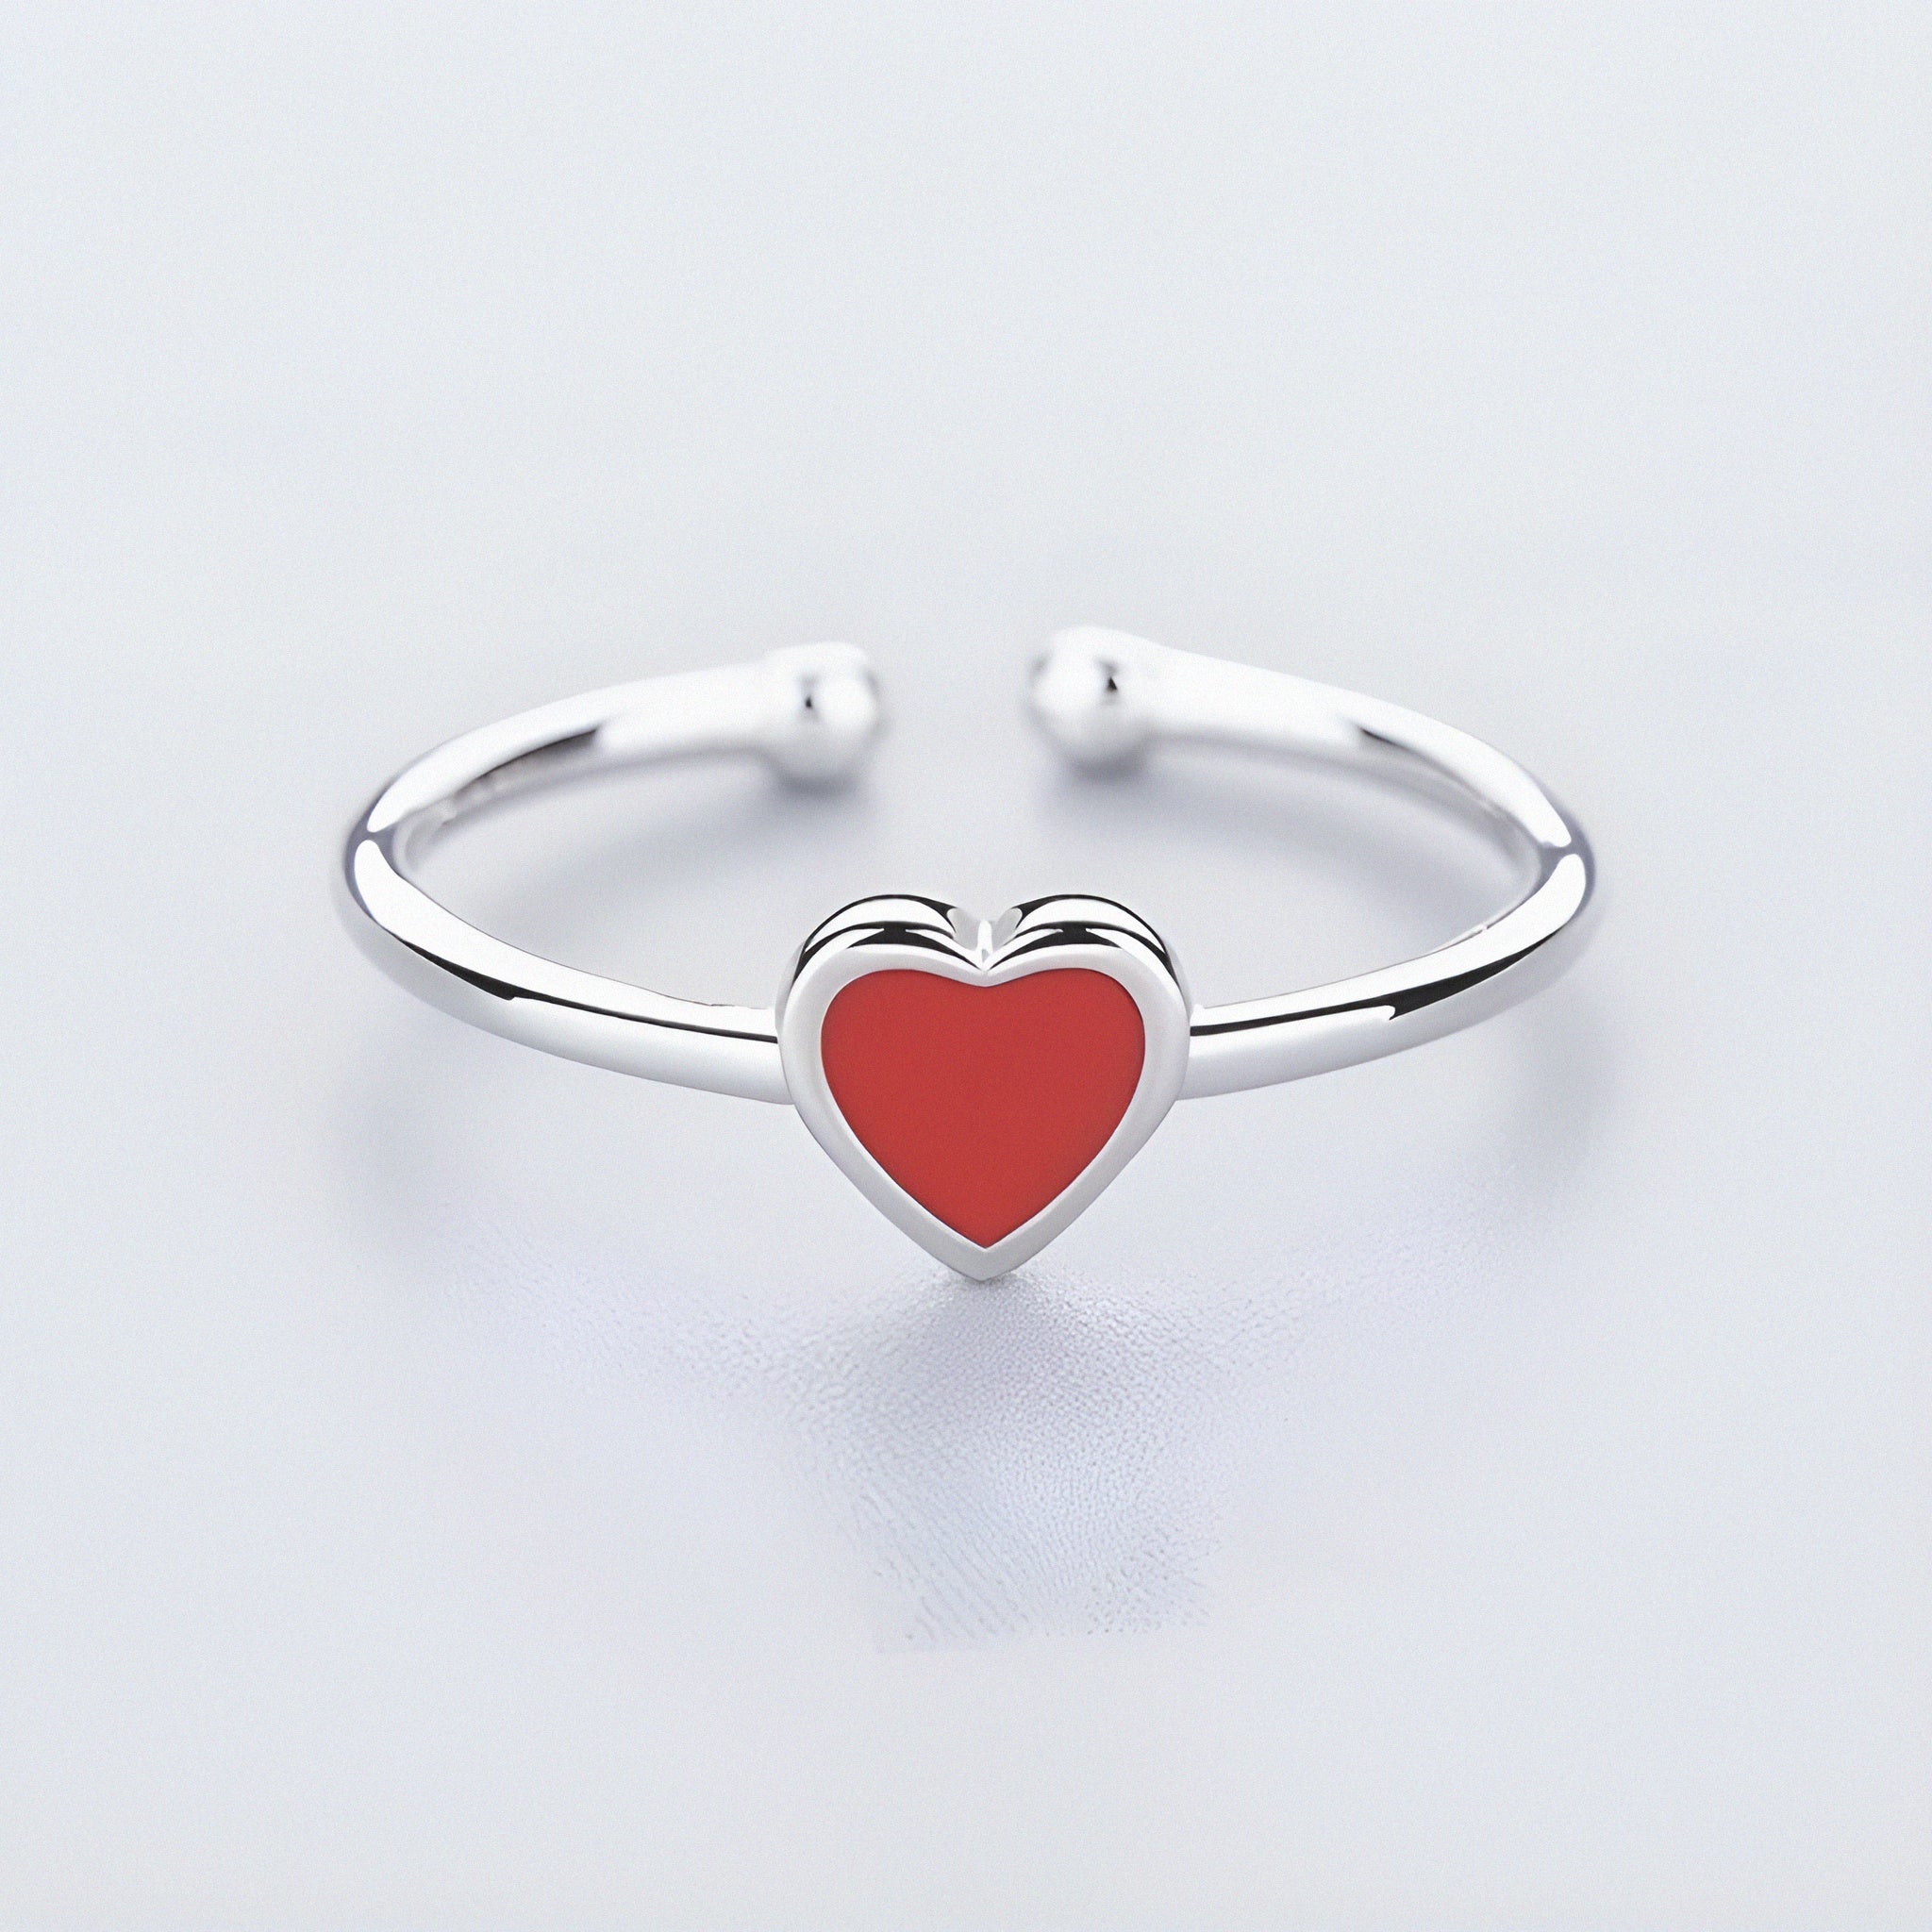 Hallmark Heart Red Ring - Jewelry by Bretta